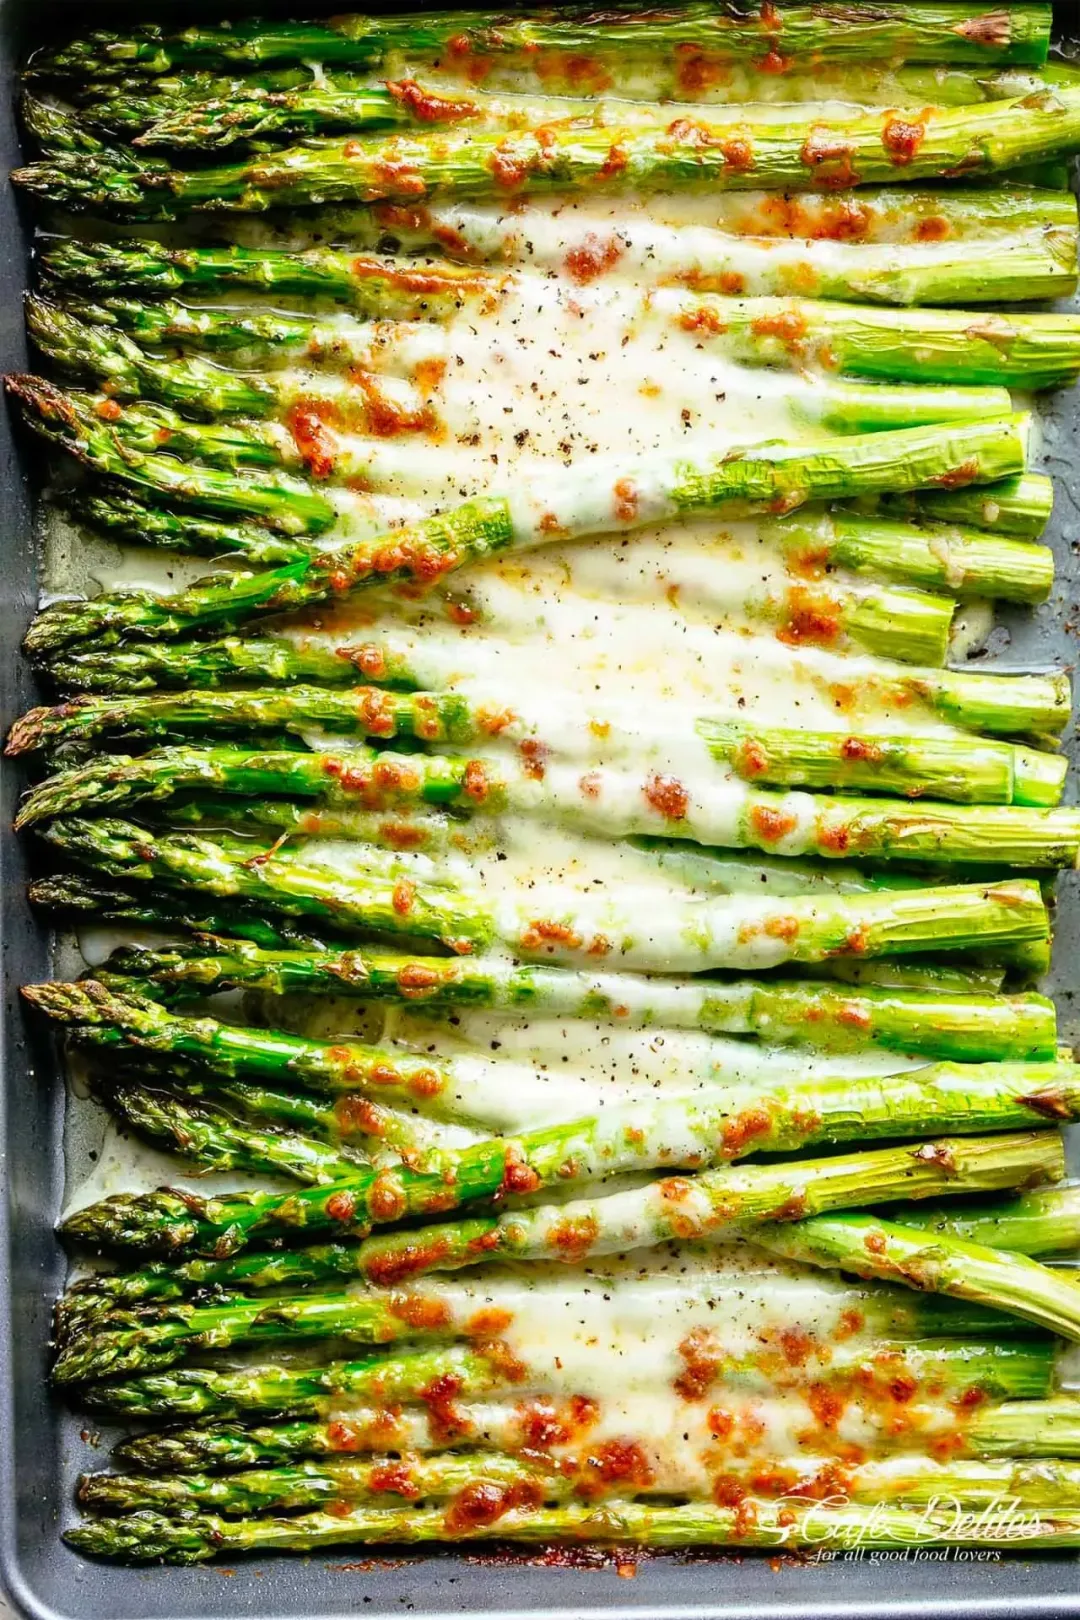 cheesy garlic roasted asparagus